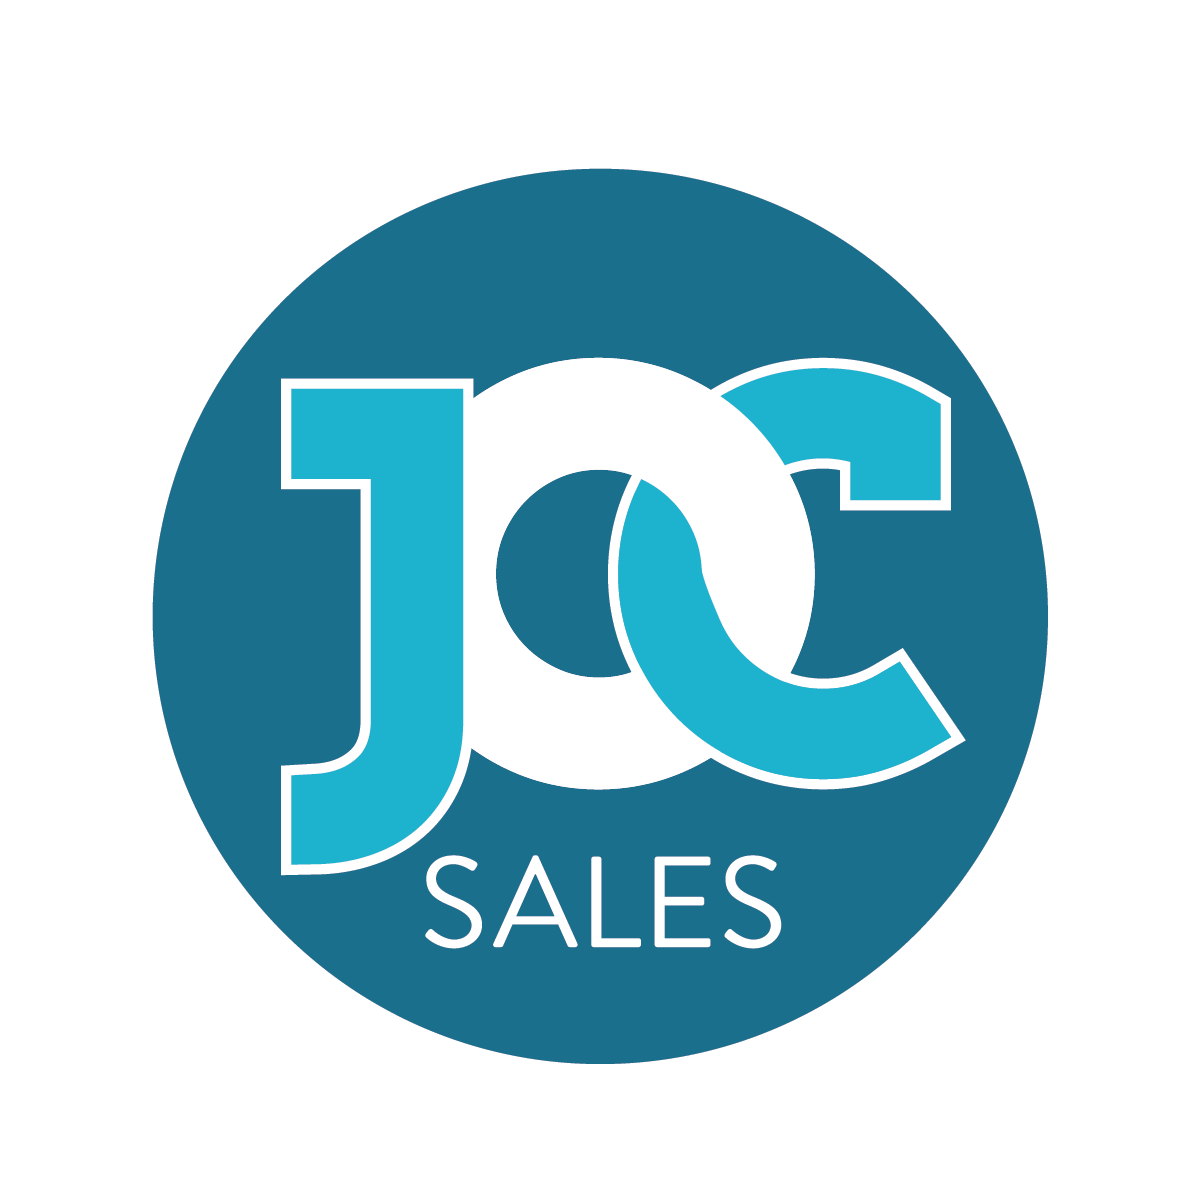 JOC Sales Logo